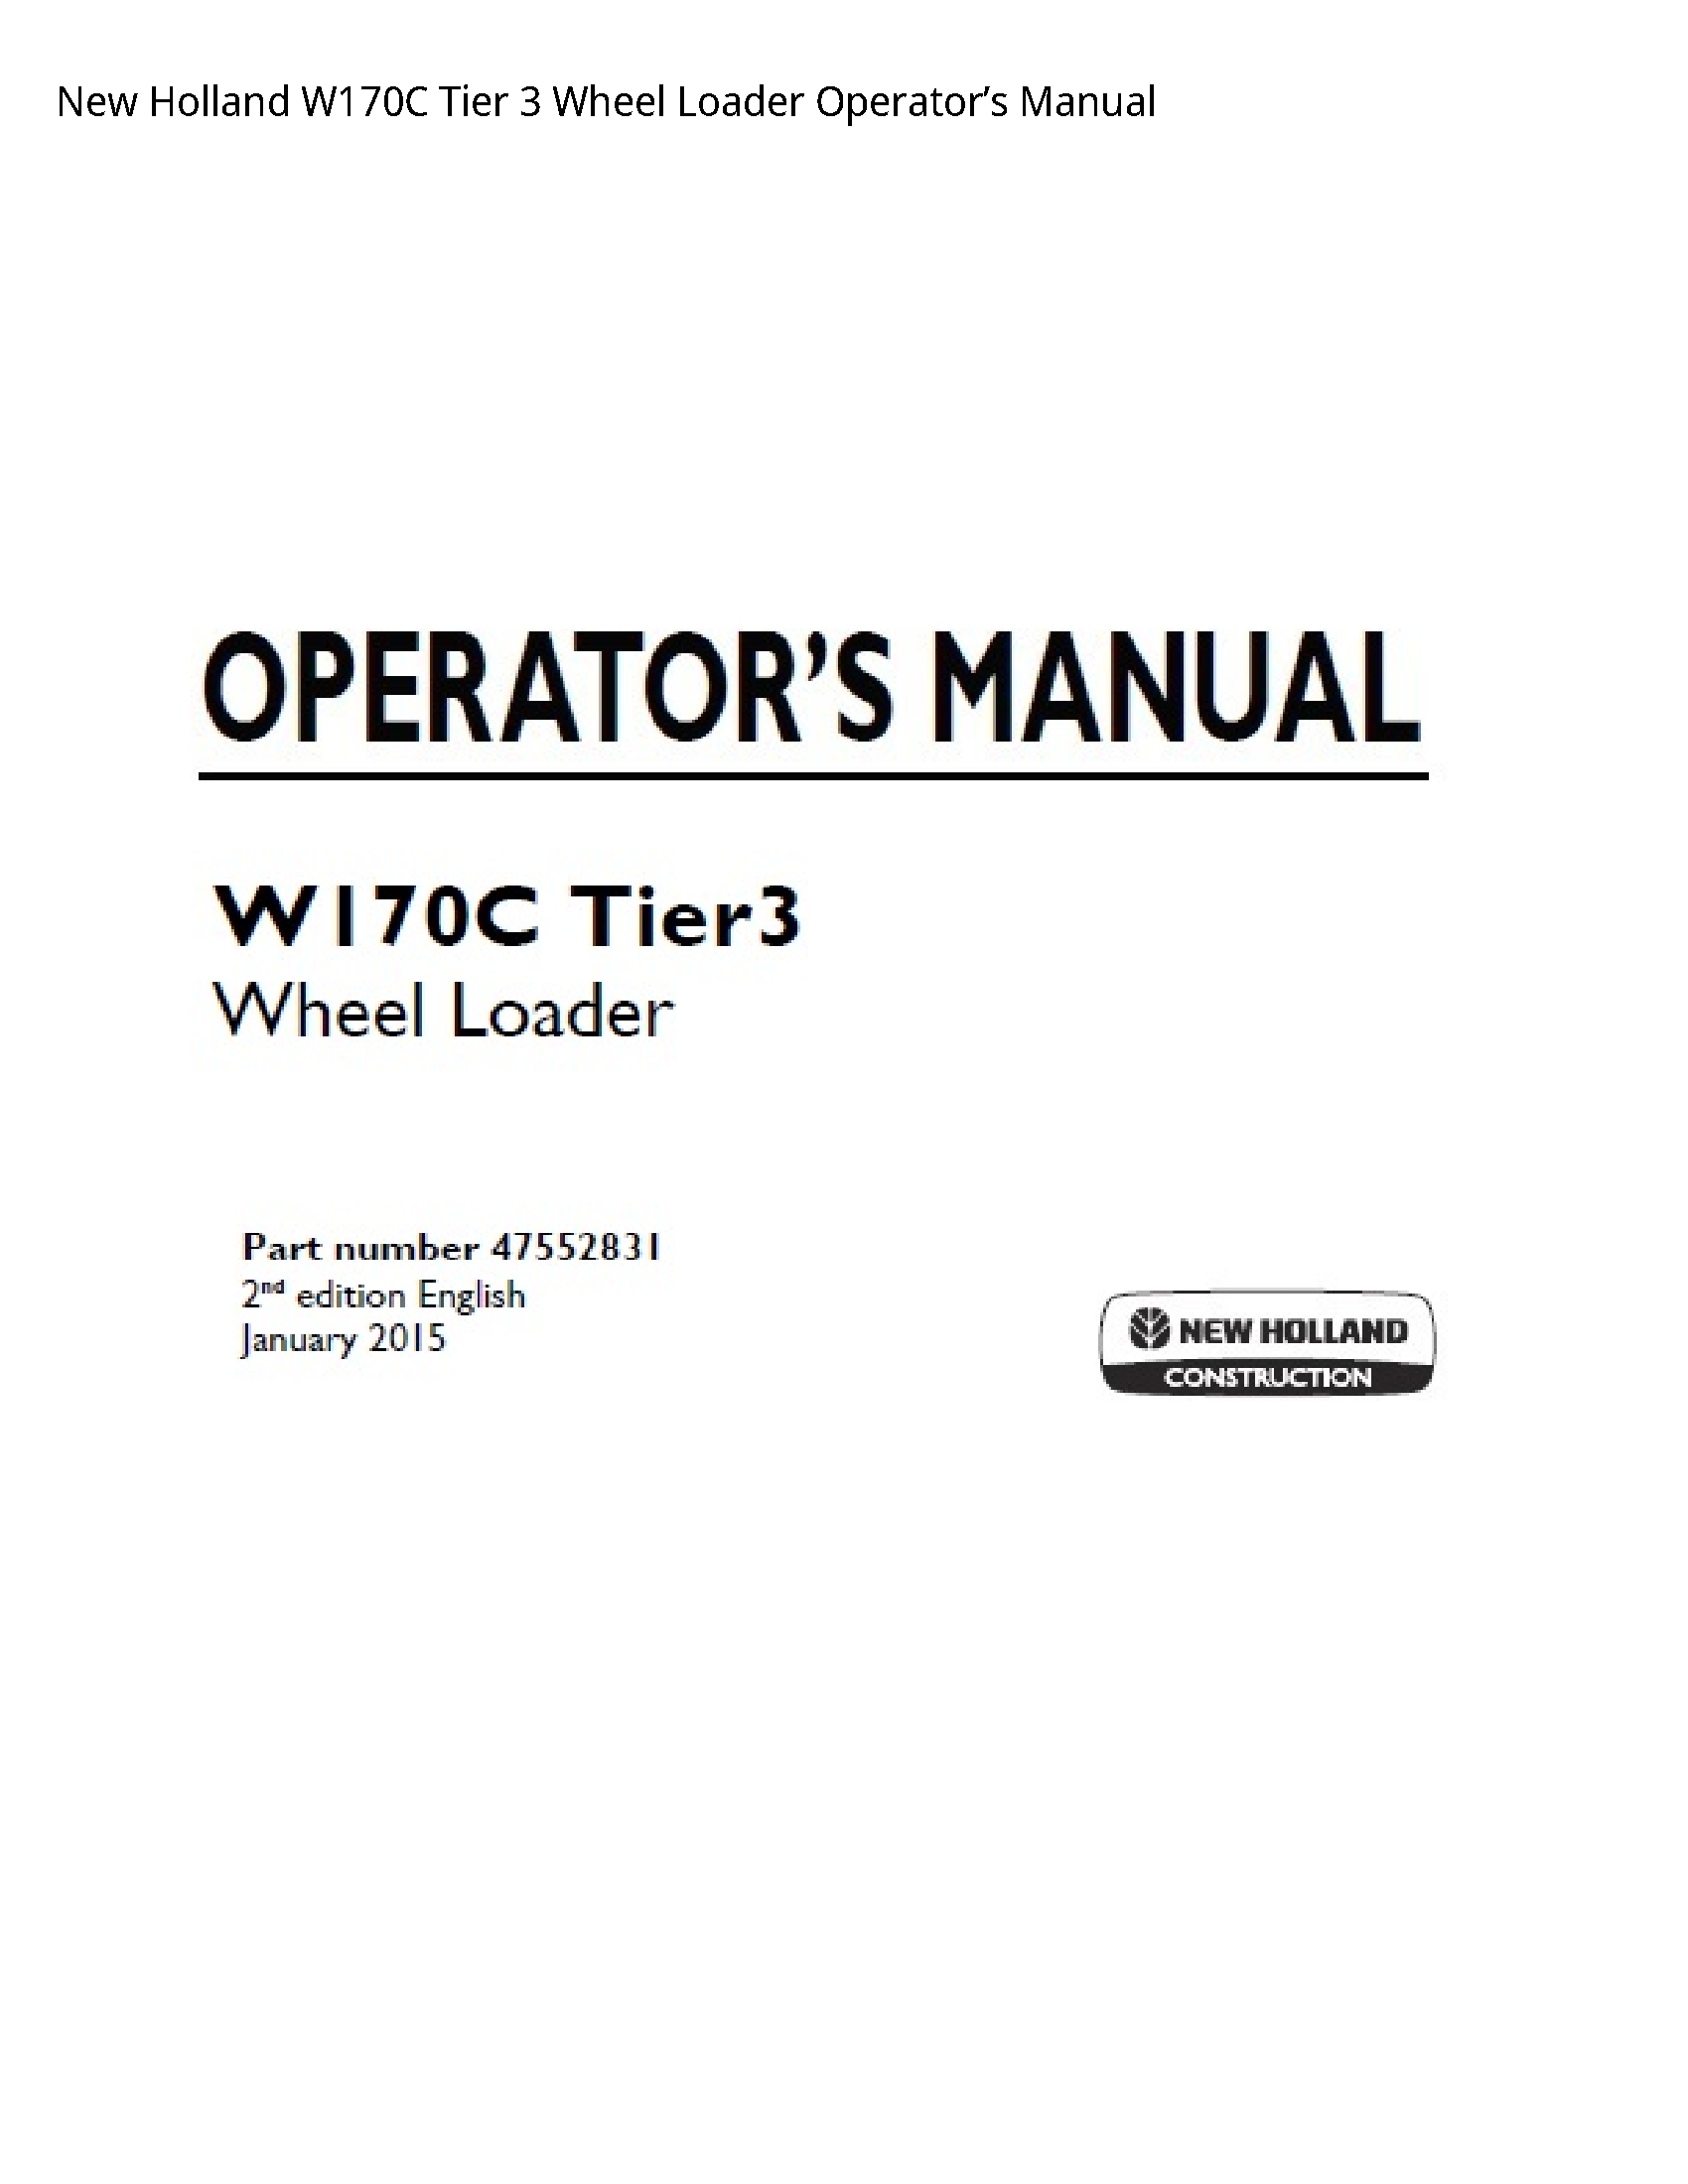 New Holland W170C Tier Wheel Loader Operator’s manual